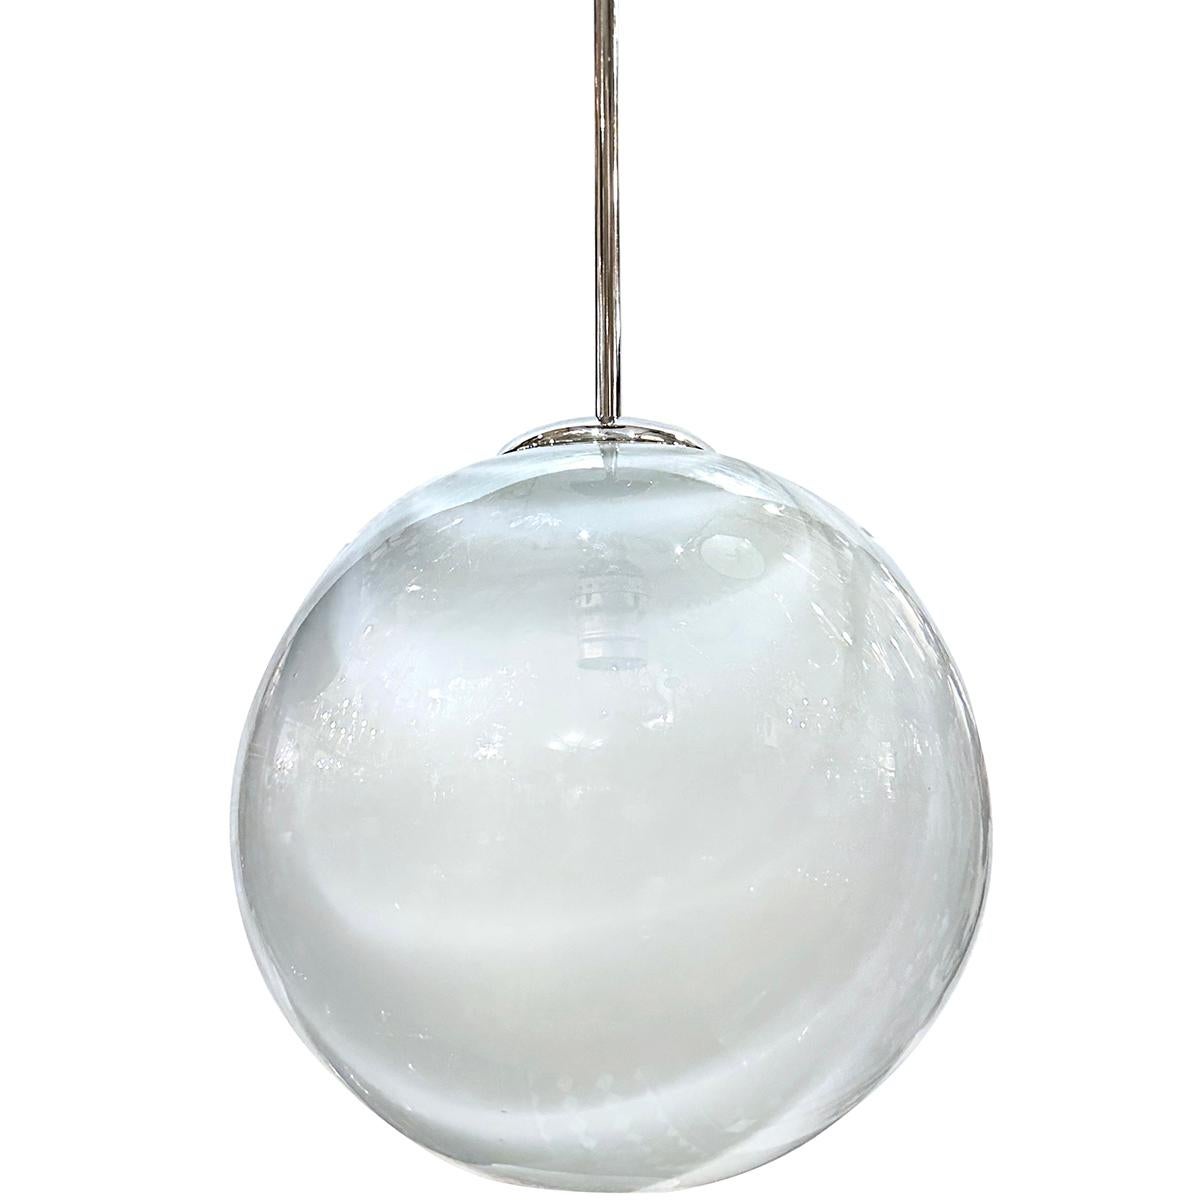 Set of six circa 1960's Italian blown glass globe light fixtures. Sold individually.

Measurements:
Drop: 24